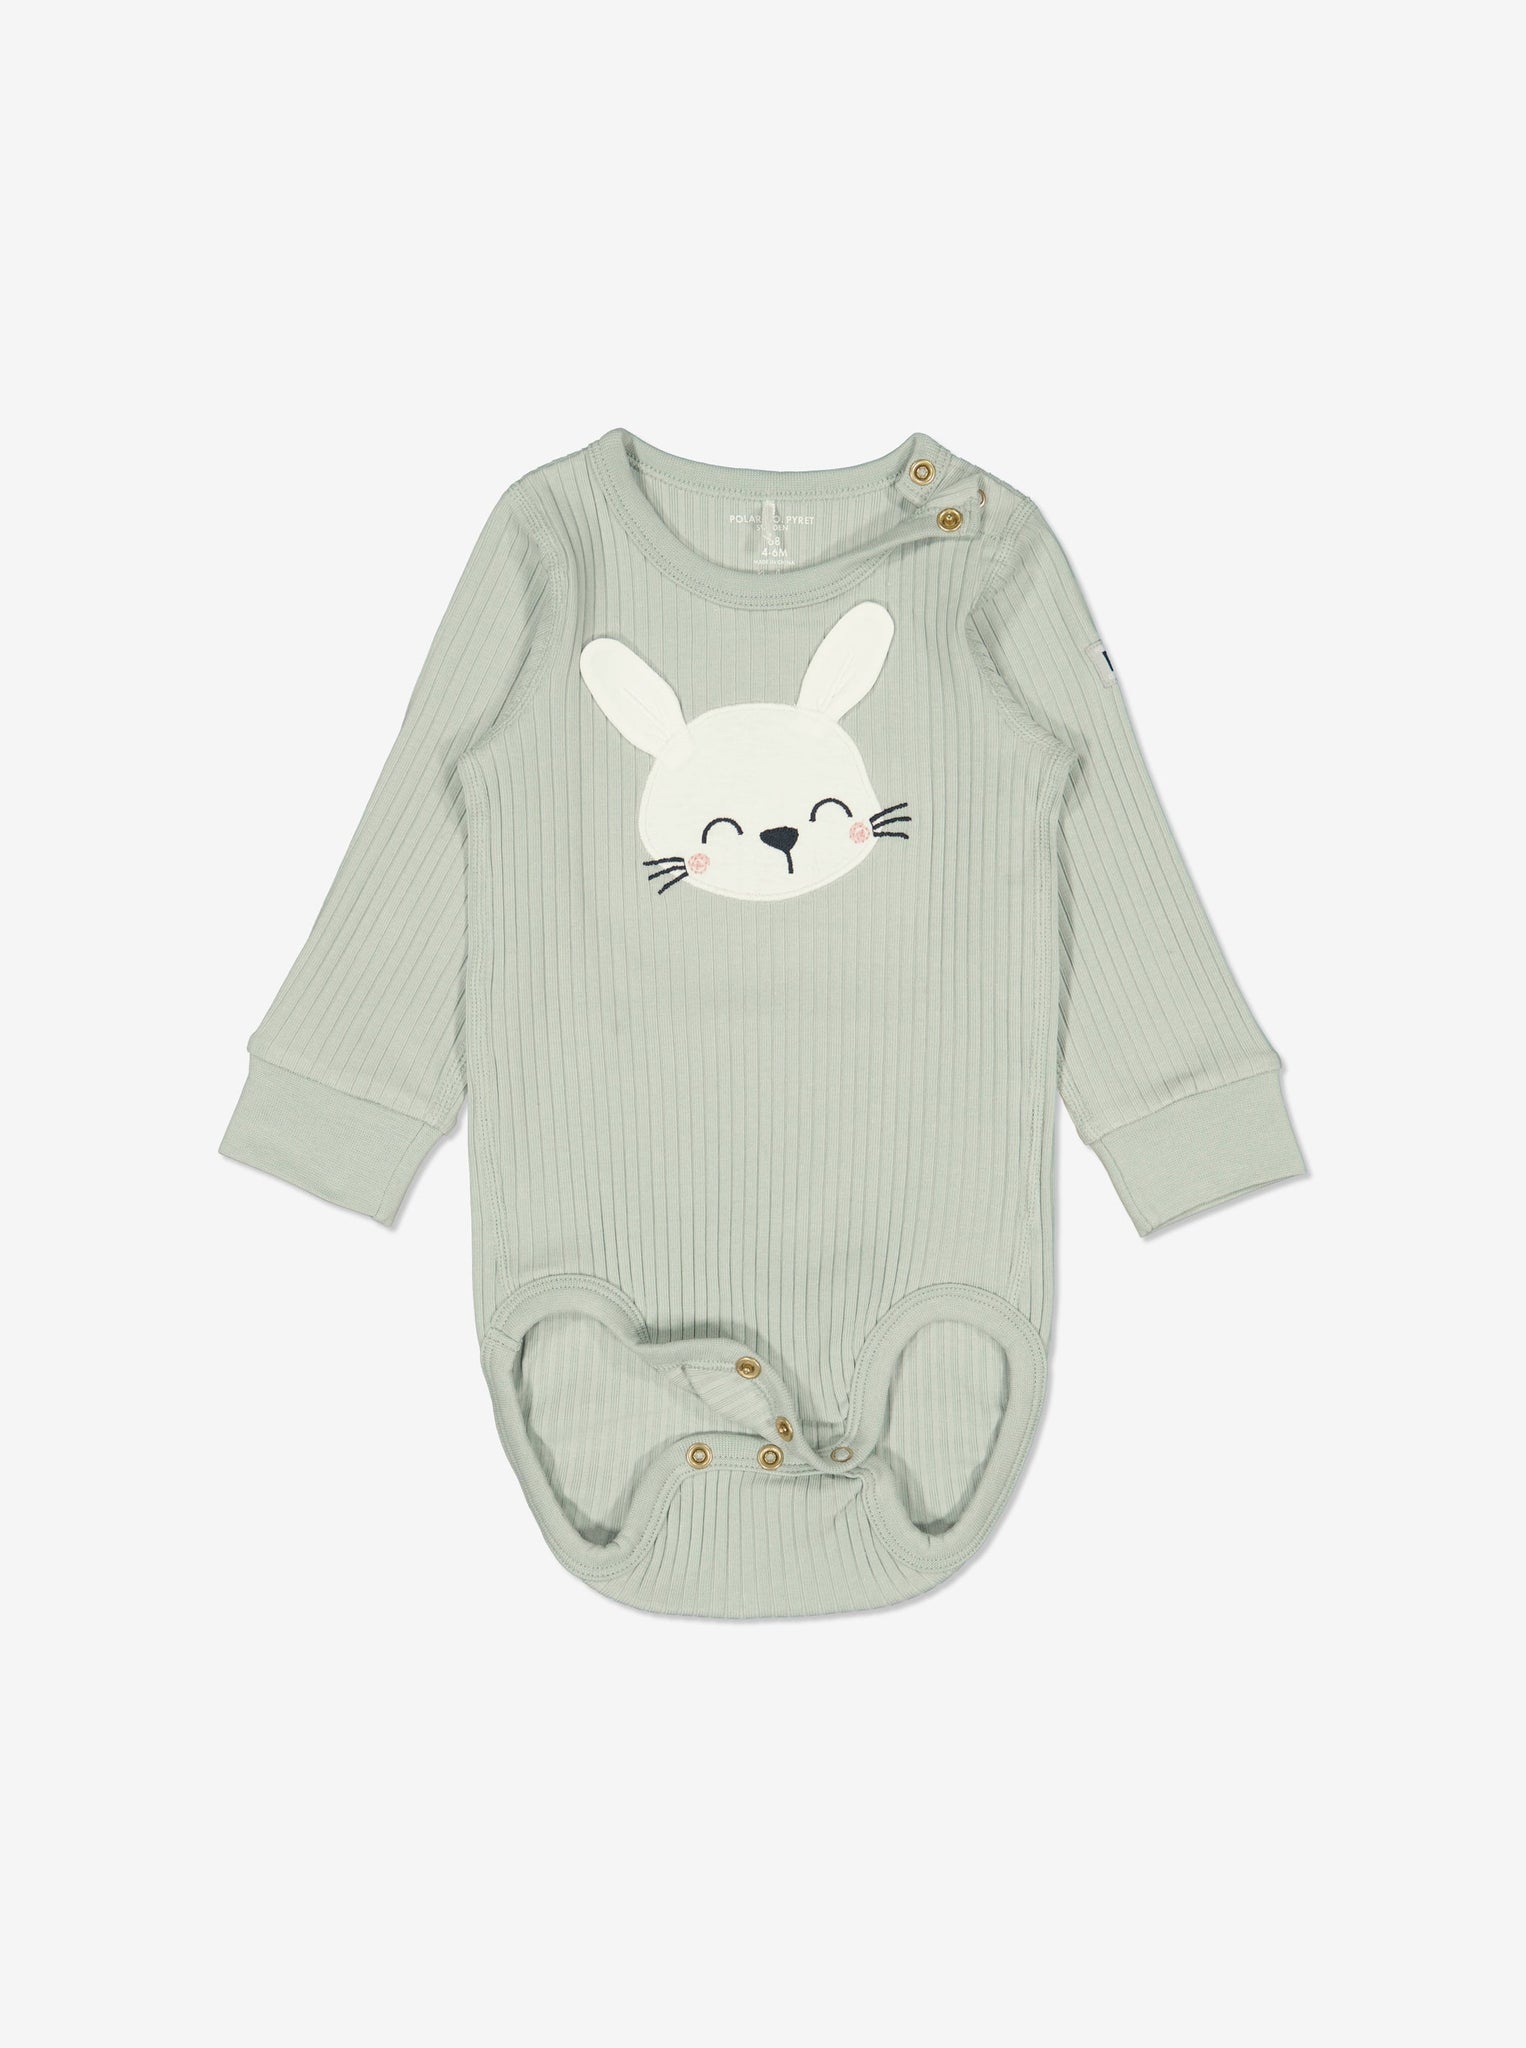  Green Rabbit Print Newborn Babygrow from Polarn O. Pyret Kidswear. Made using sustainable materials.